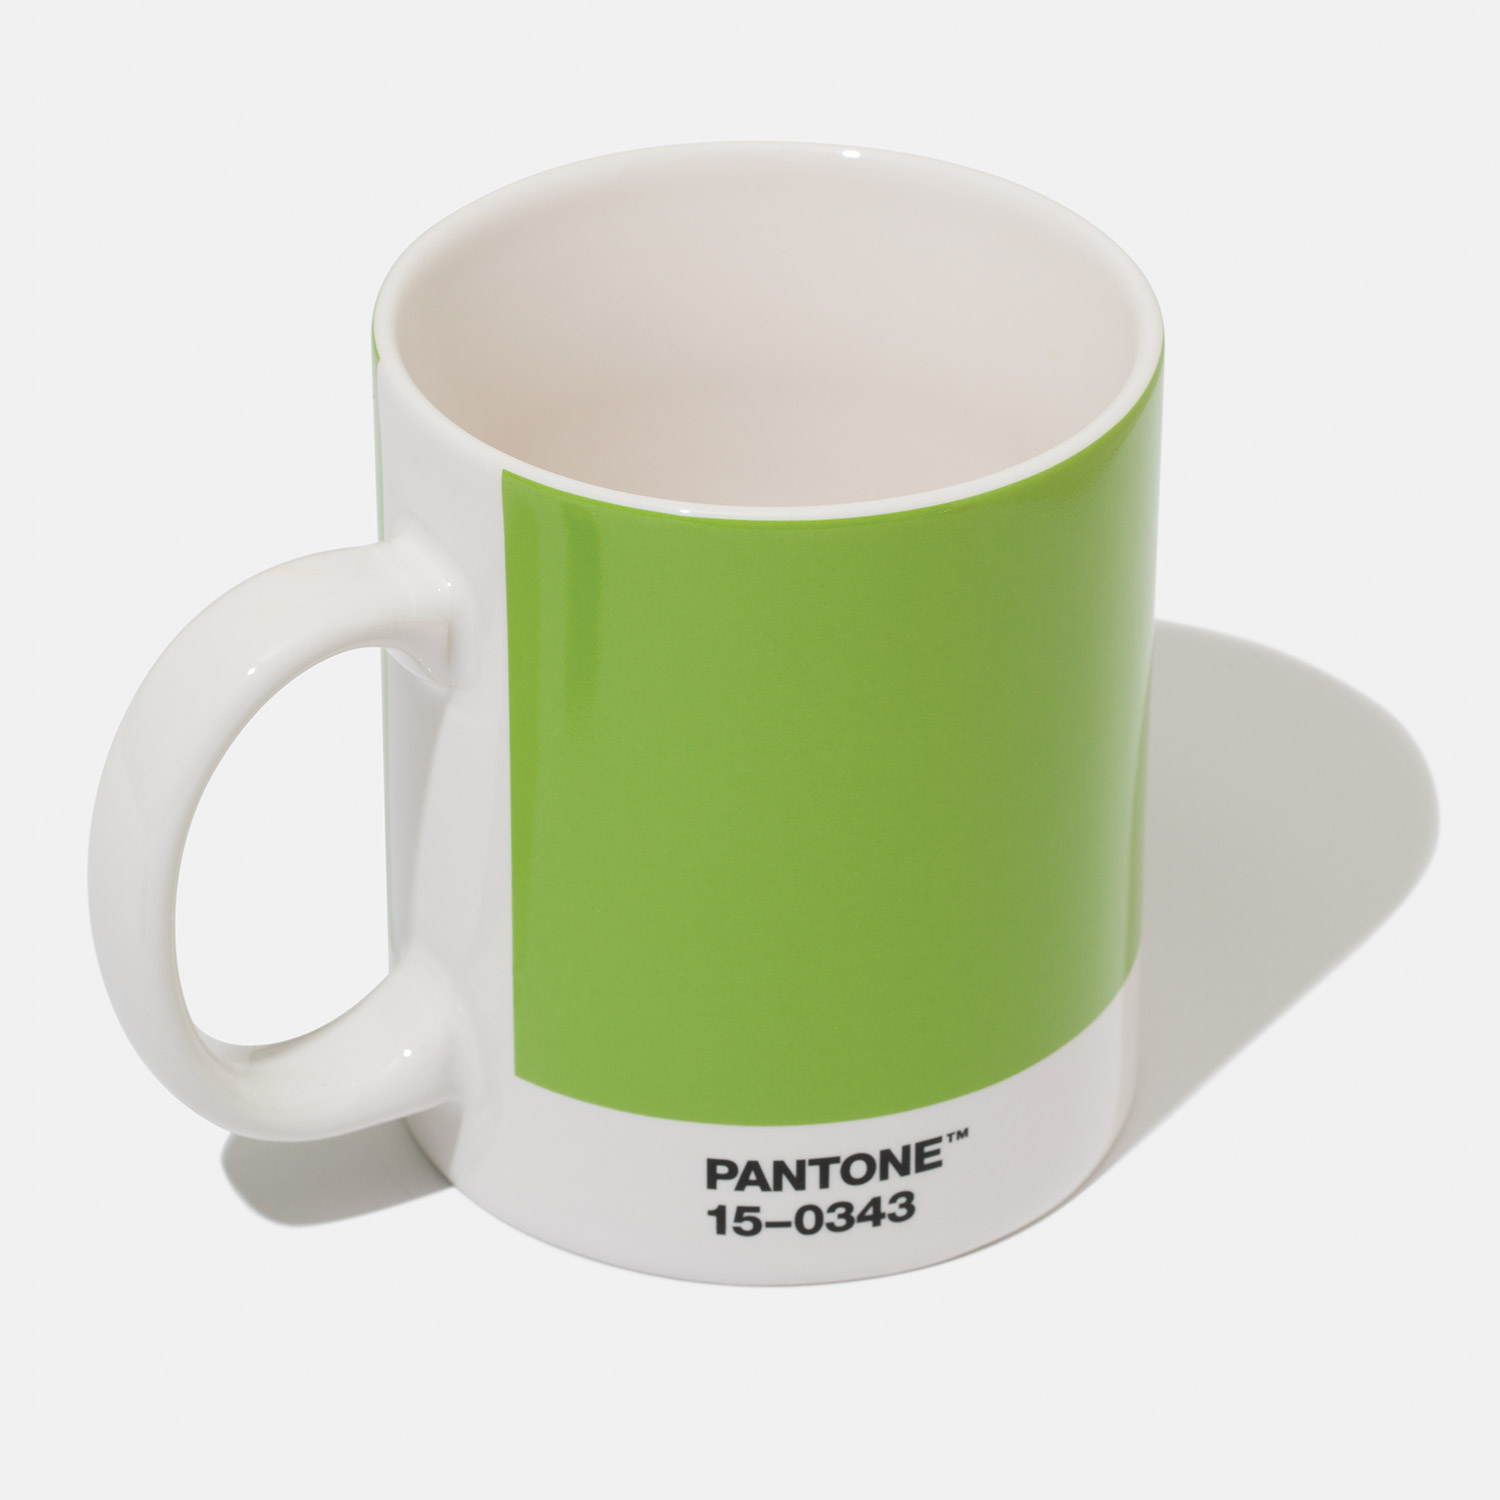 Pantone Mug Greenery 15-0343 Color of the Year 2017